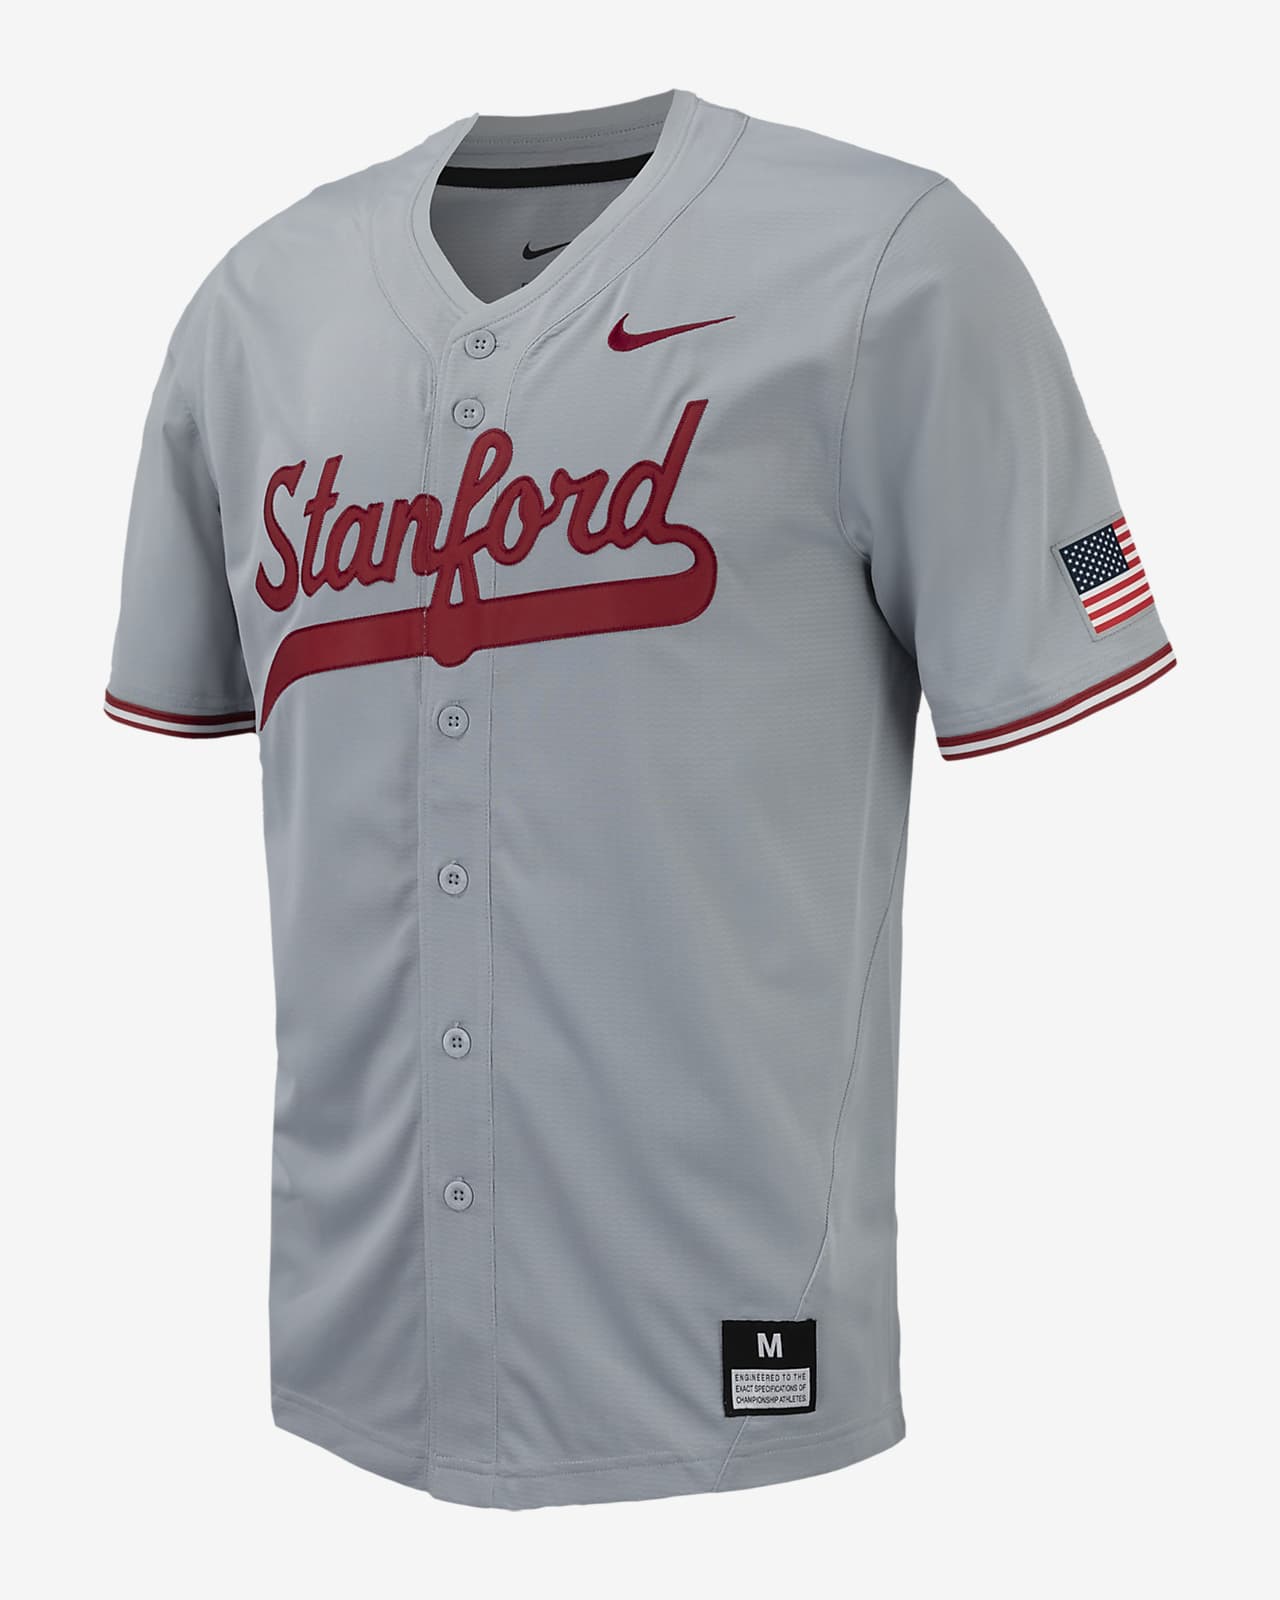 Stanford Men's Nike College Replica Baseball Jersey